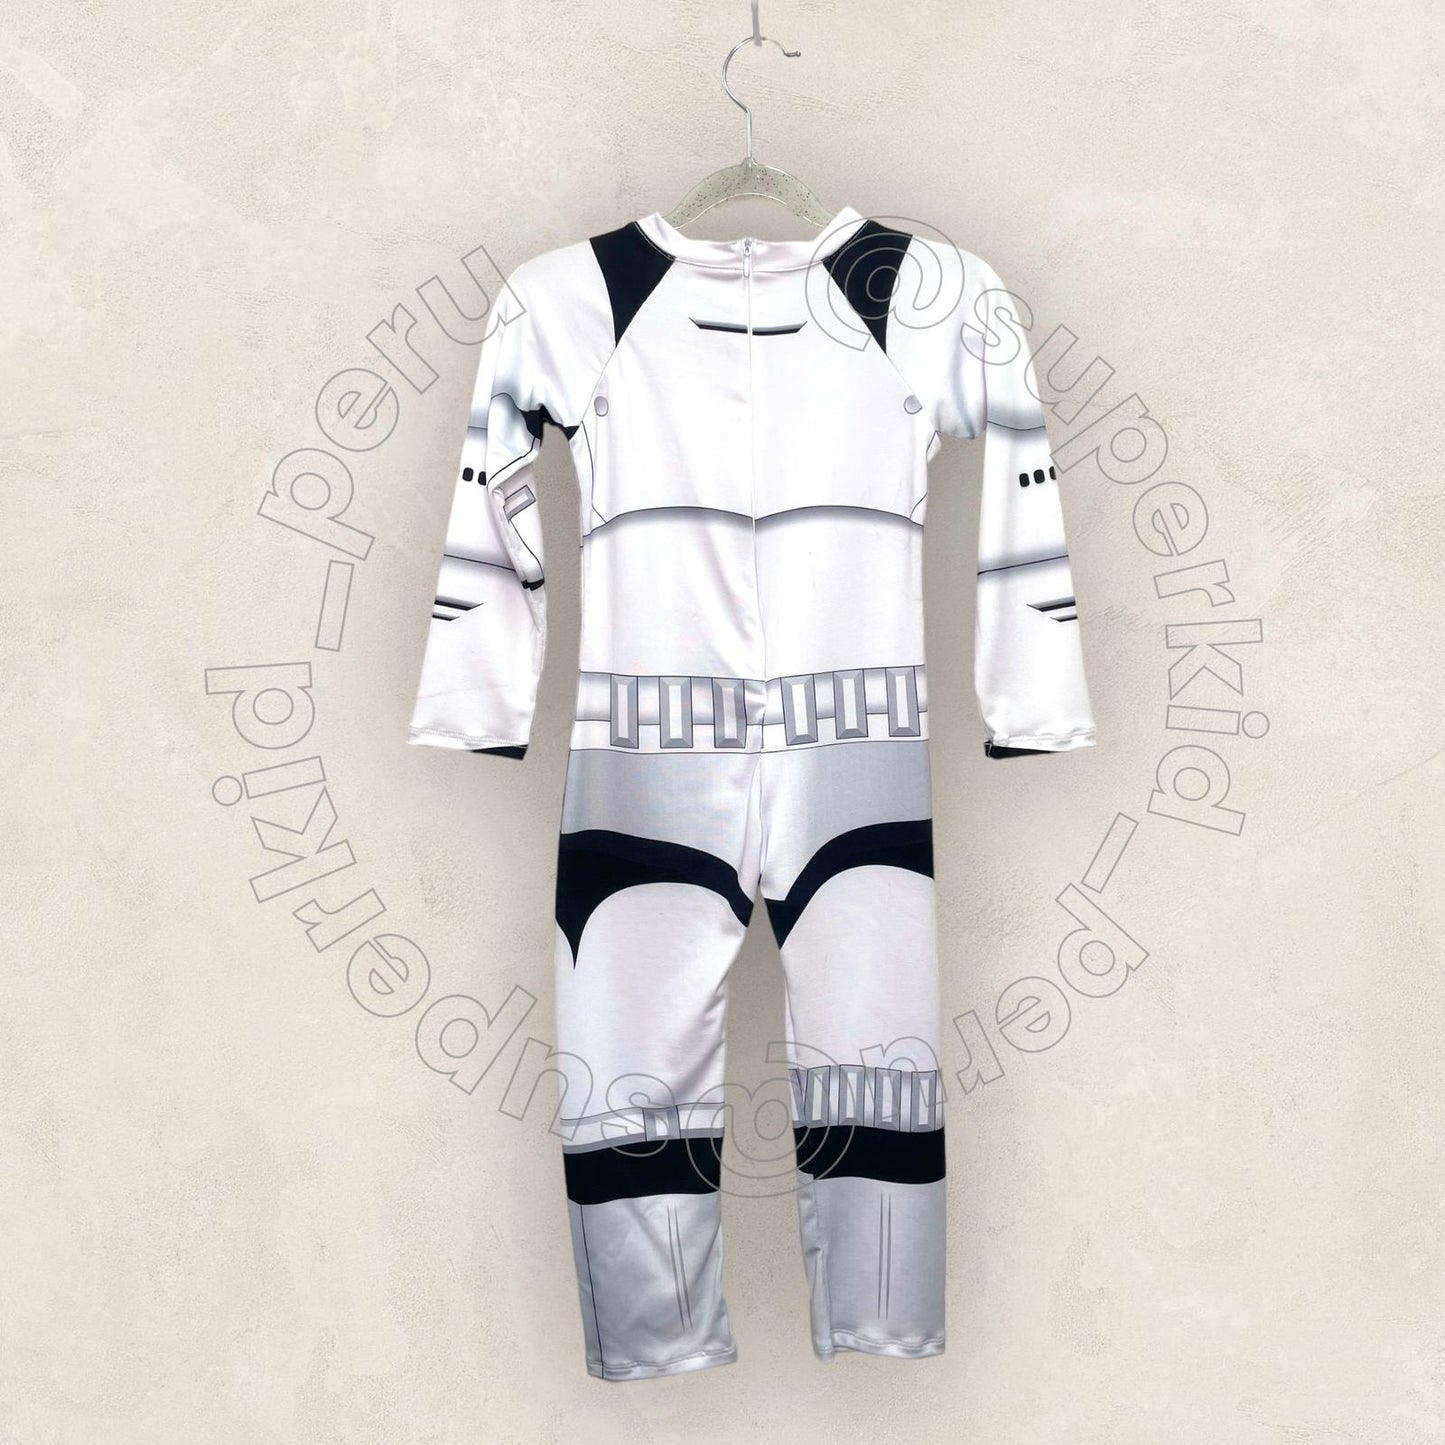 Disfraz Stormtrooper - Star Wars